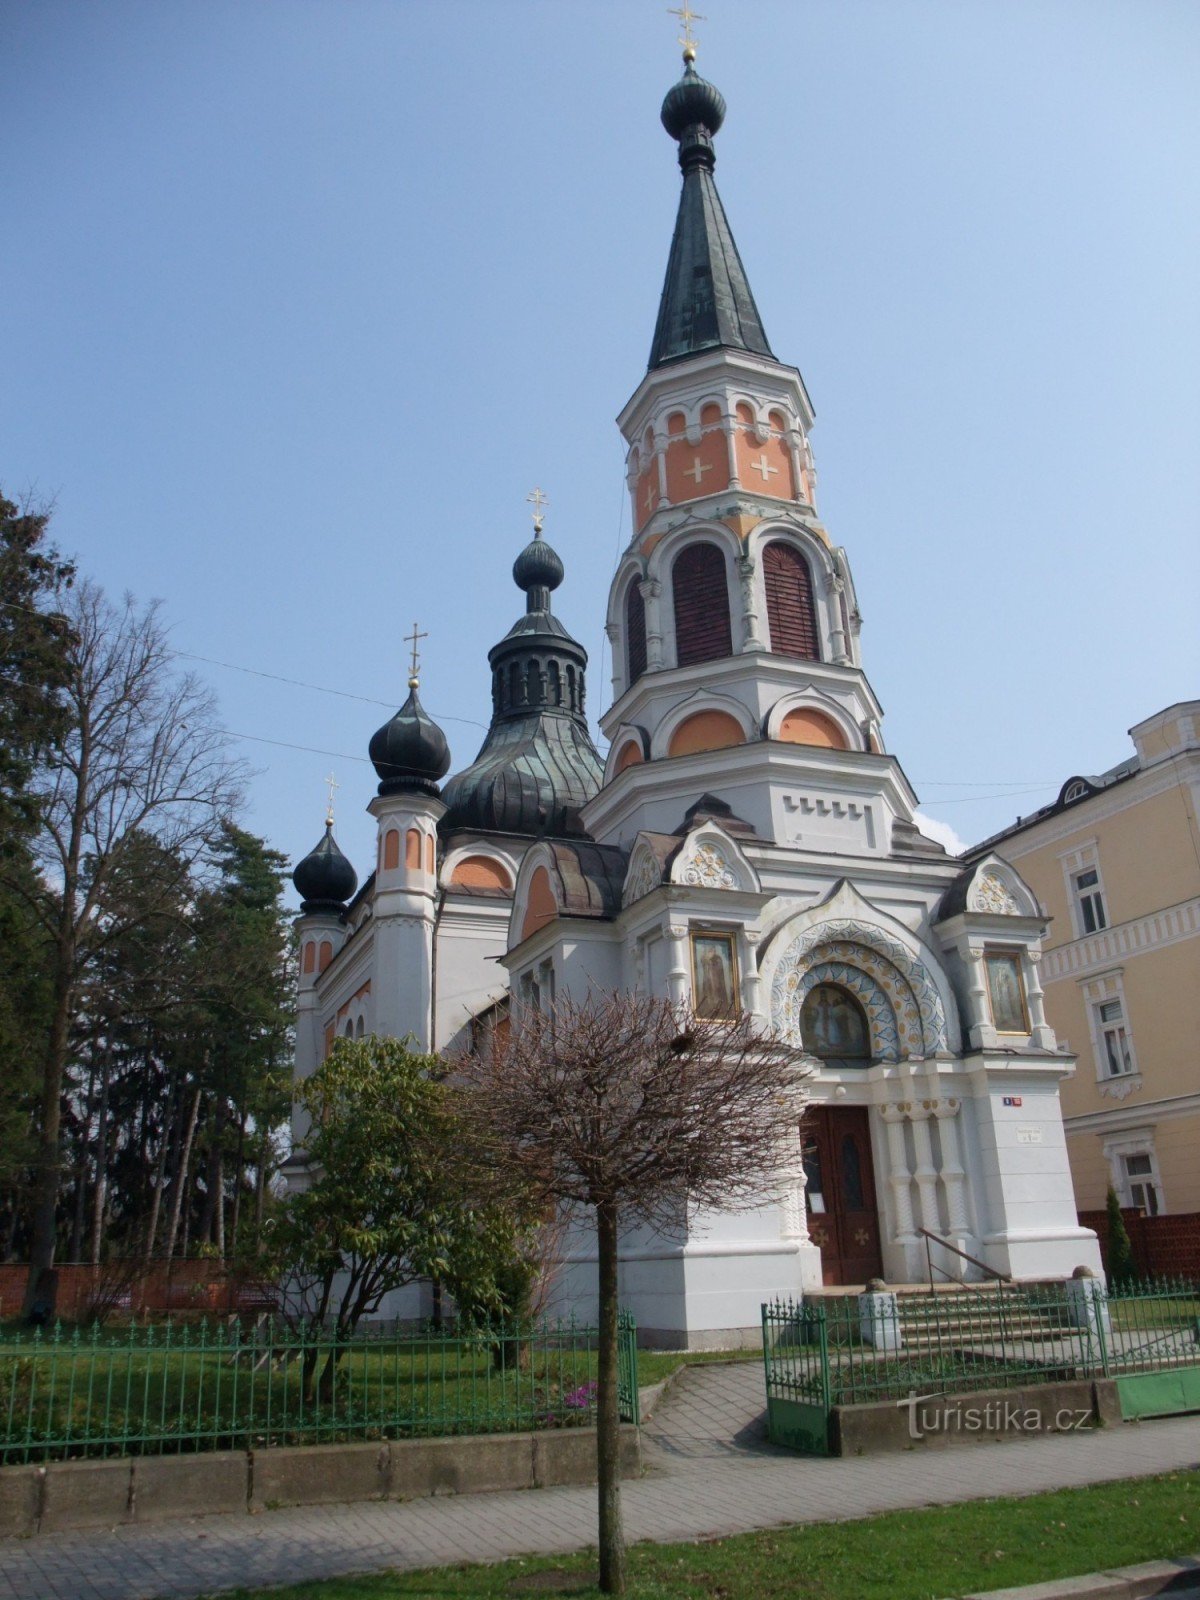 St. Olga's Orthodox Church in Františkovy Lázně